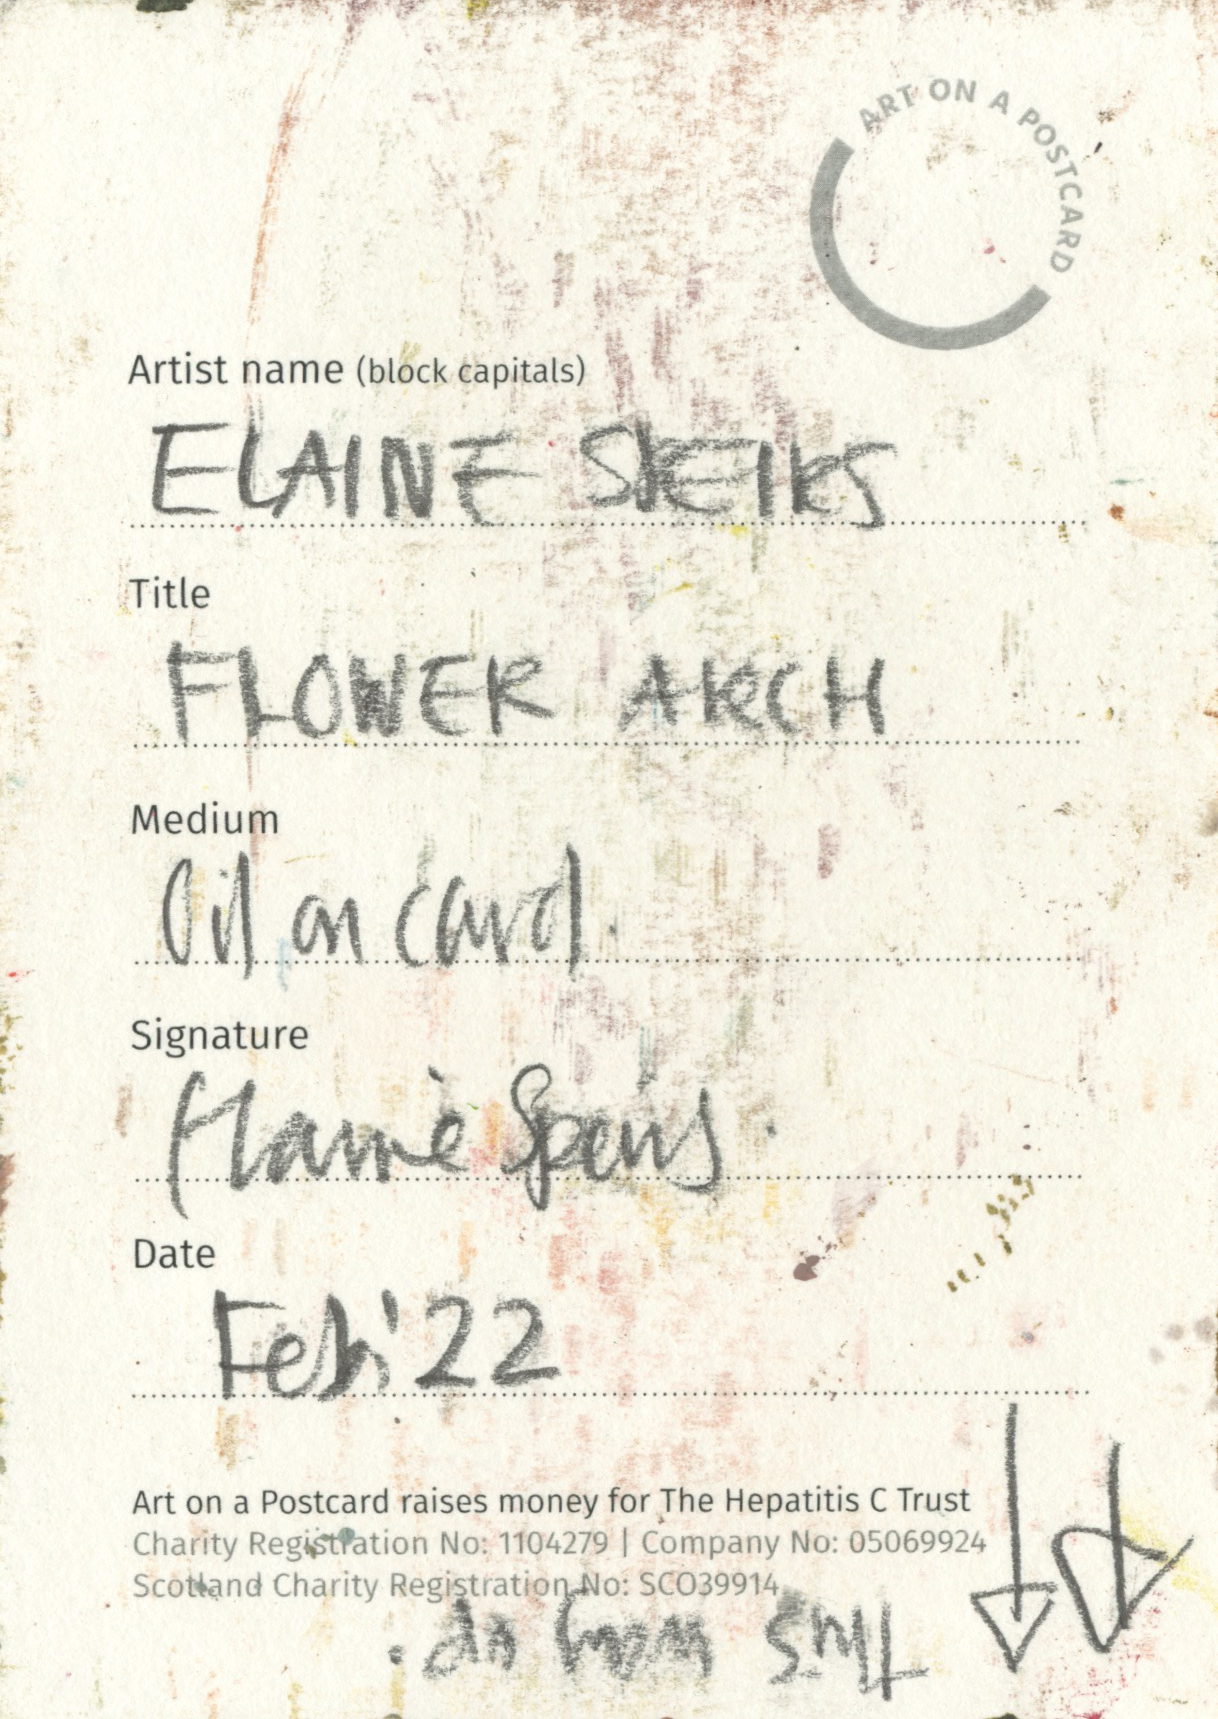 12. Elaine Speirs - Flower Arch - BACK